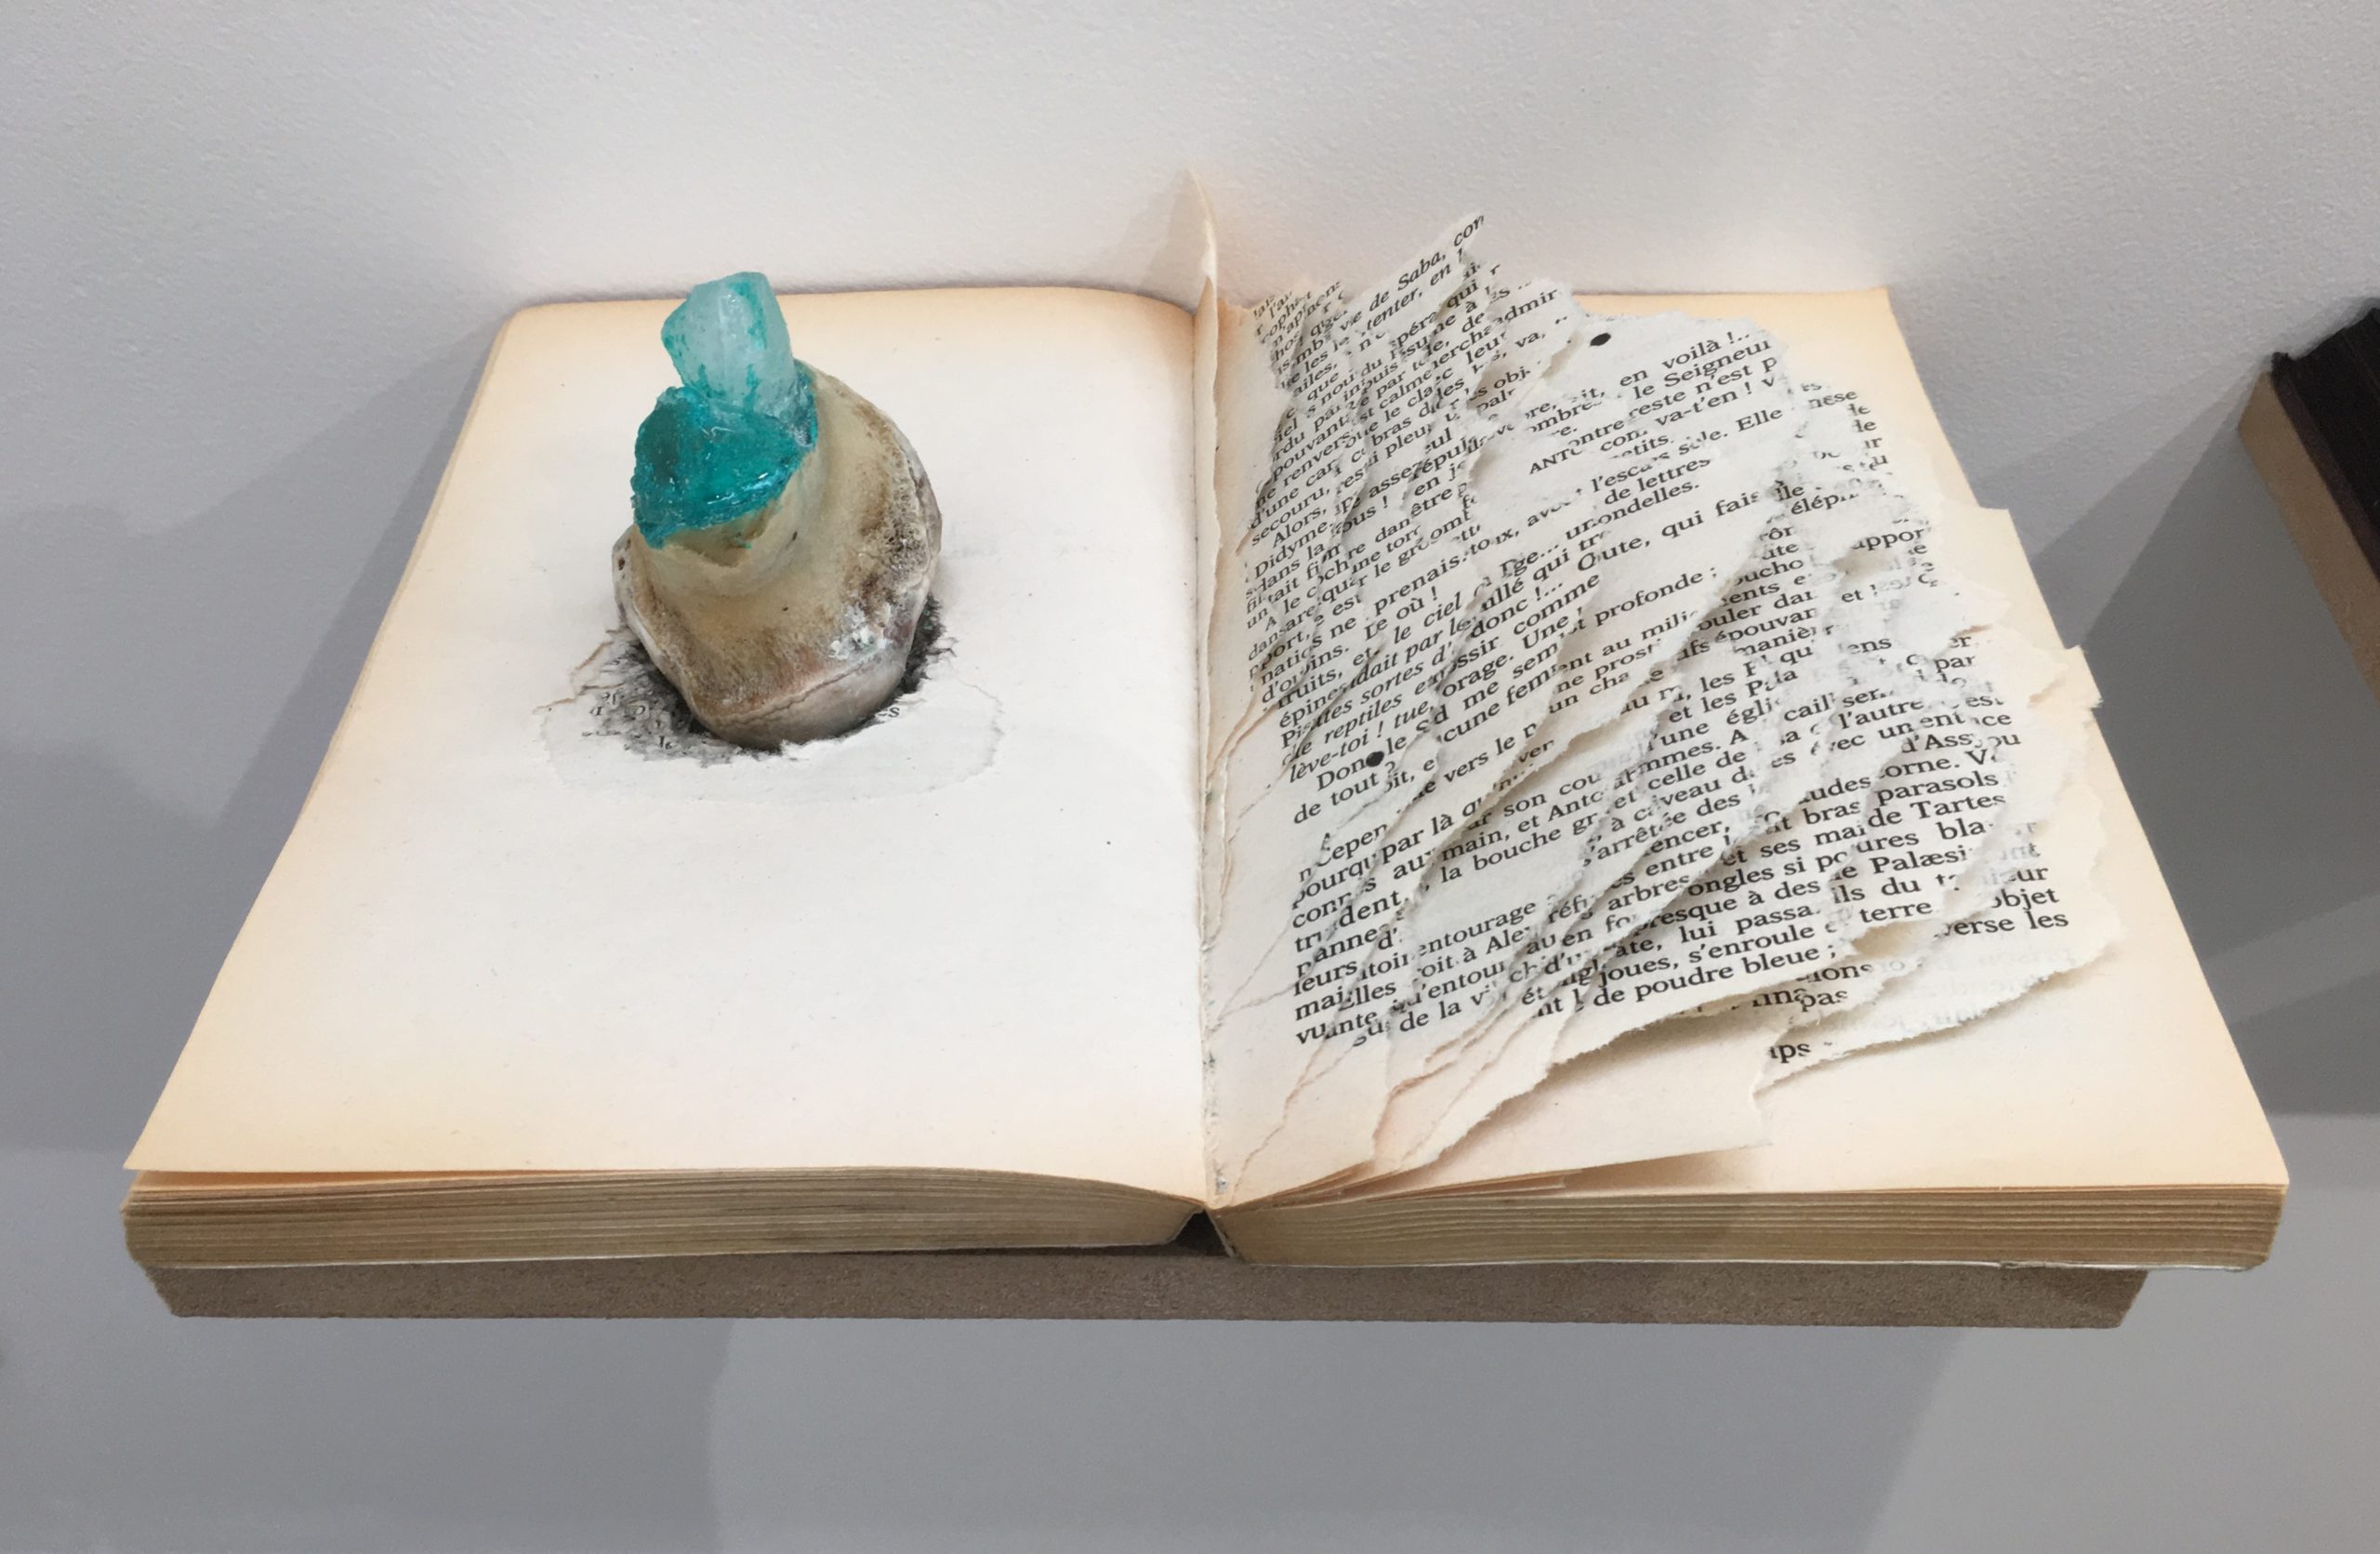 6 – Fossiles. Installation. Books, stone, bones, ink, thimble. Art Brussels. 2018